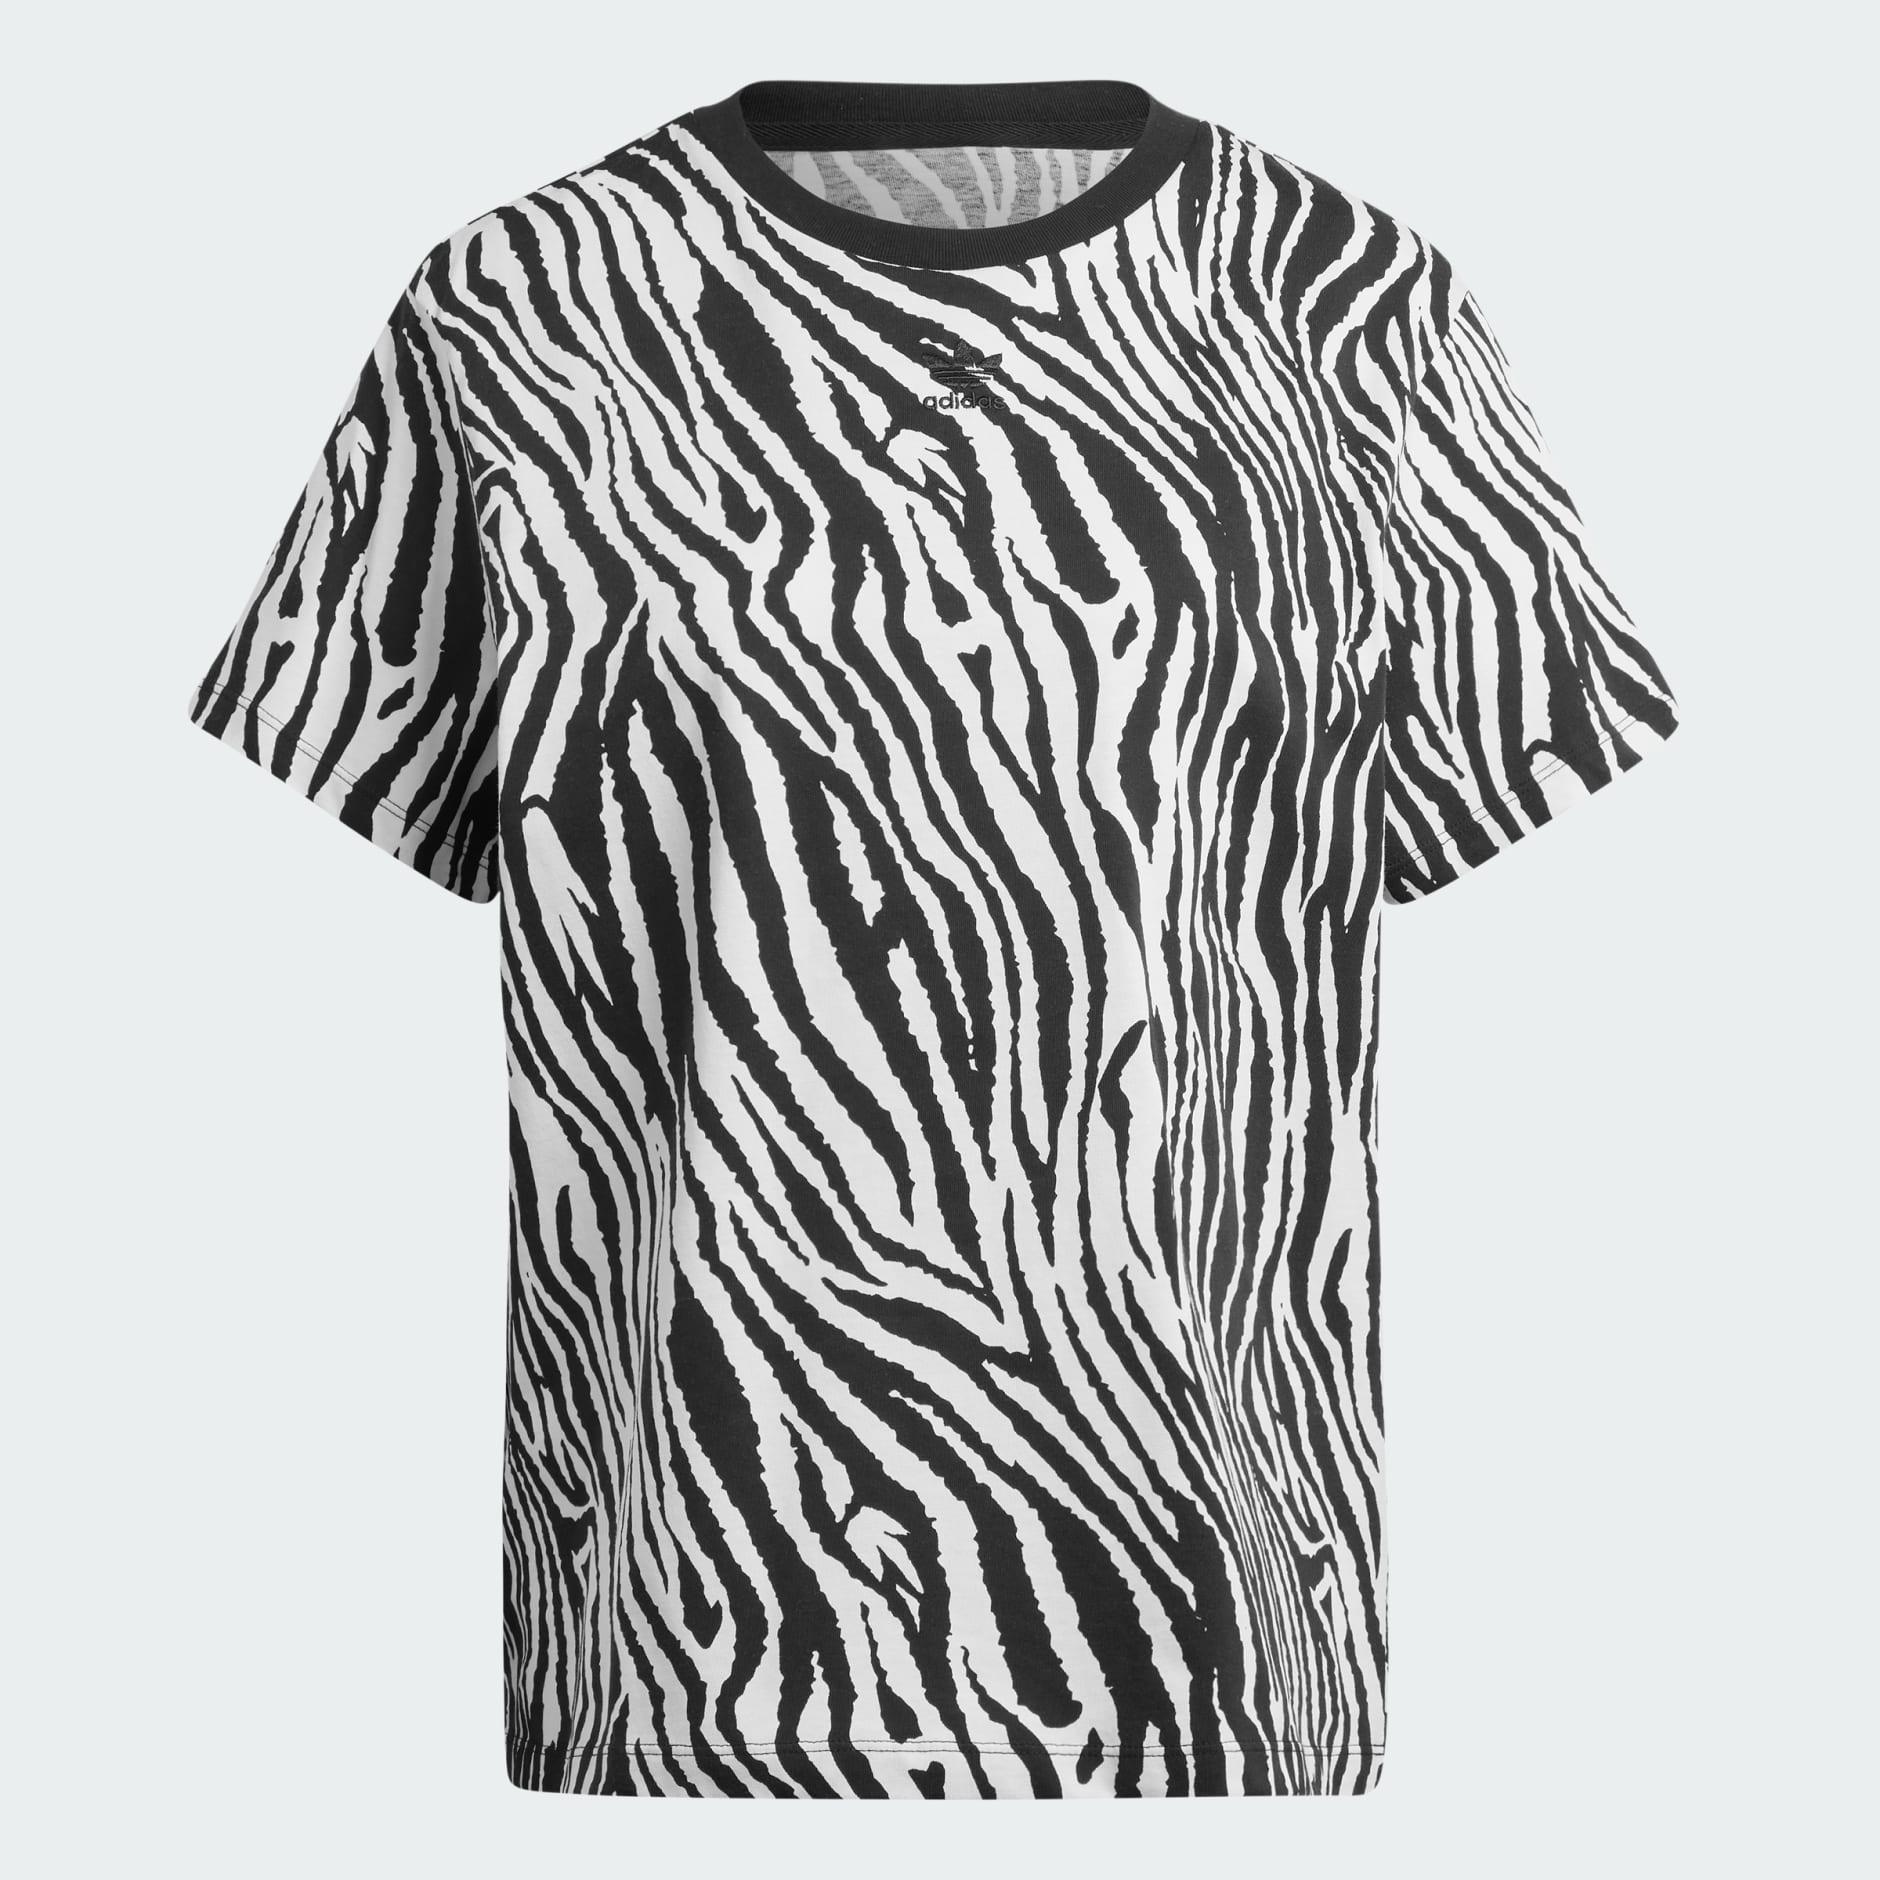 TZ - | Print White Allover Essentials adidas Zebra Animal Tee adidas